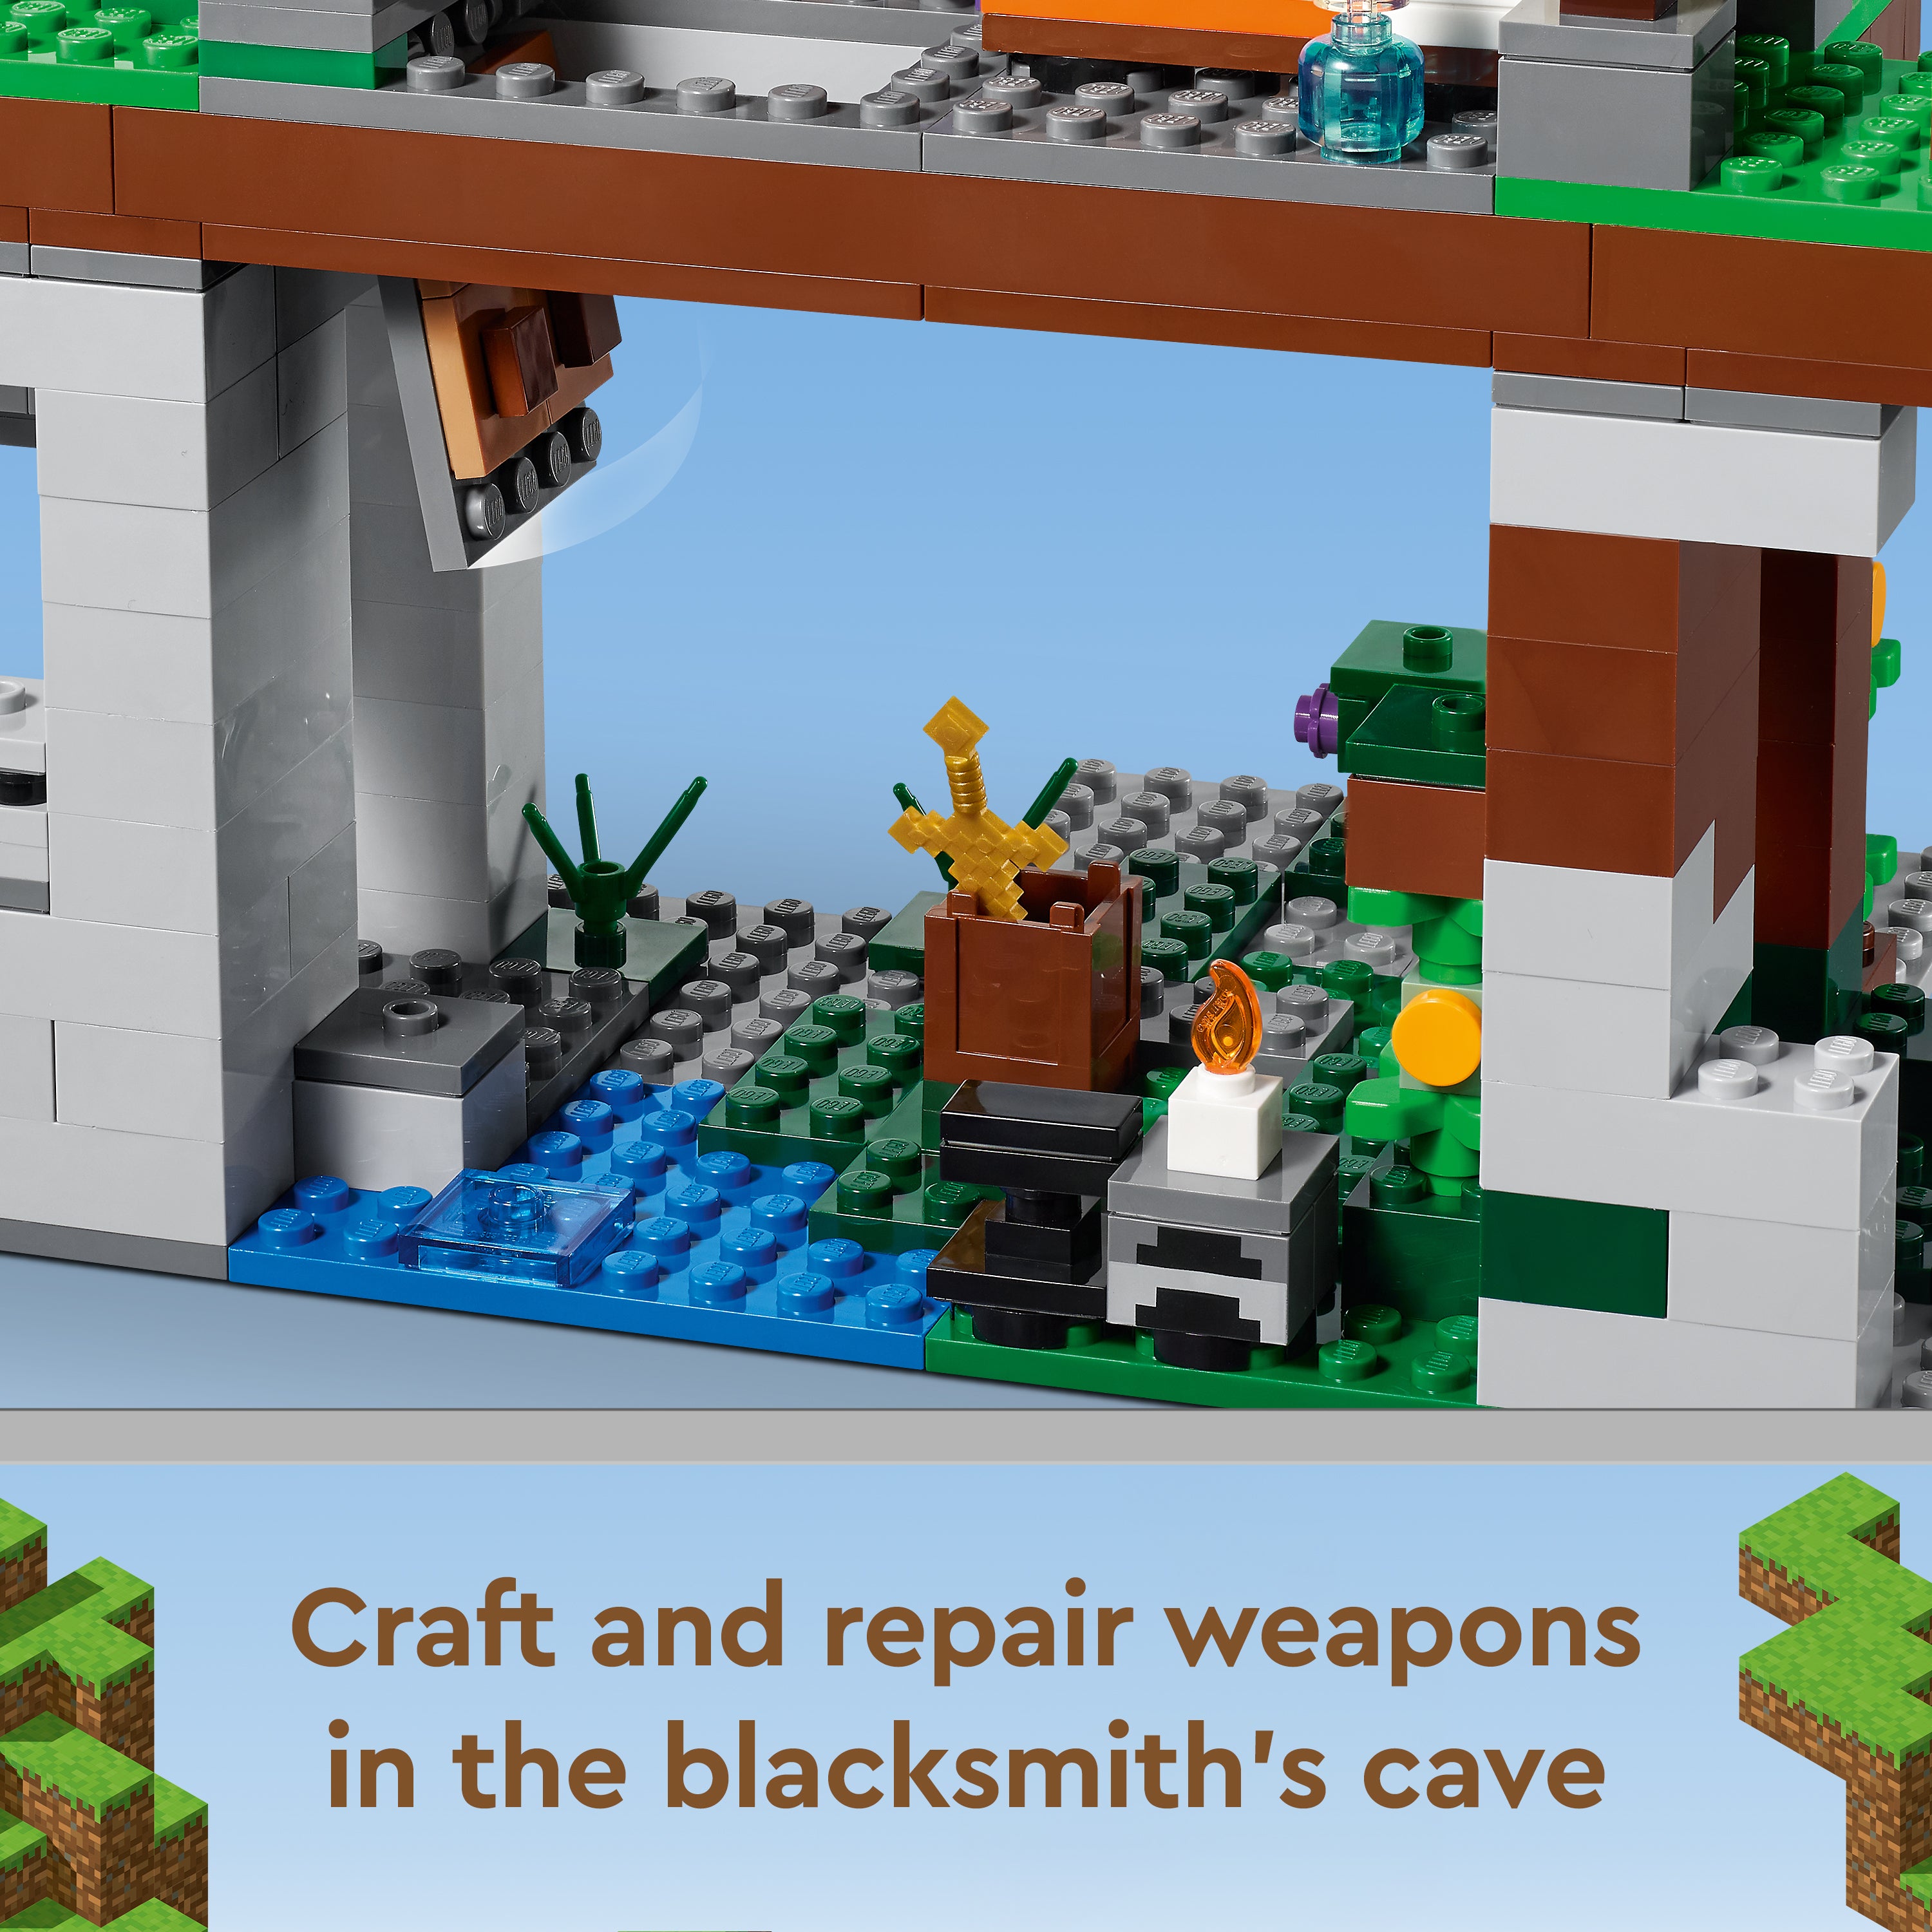 Lego 21183 Minecraft Dojo Cave